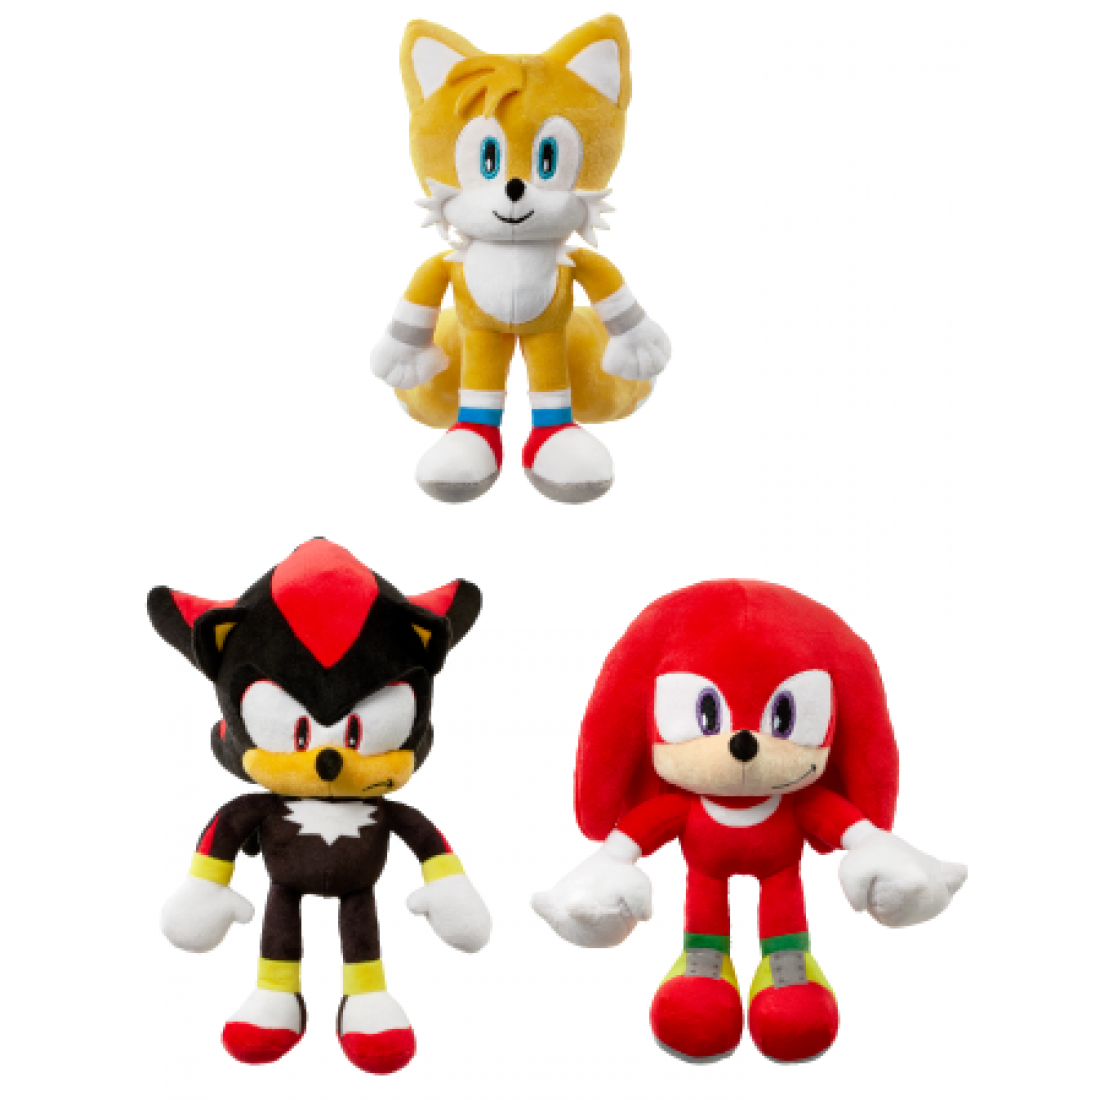 Sonic the Hedgehog & Friends Plush